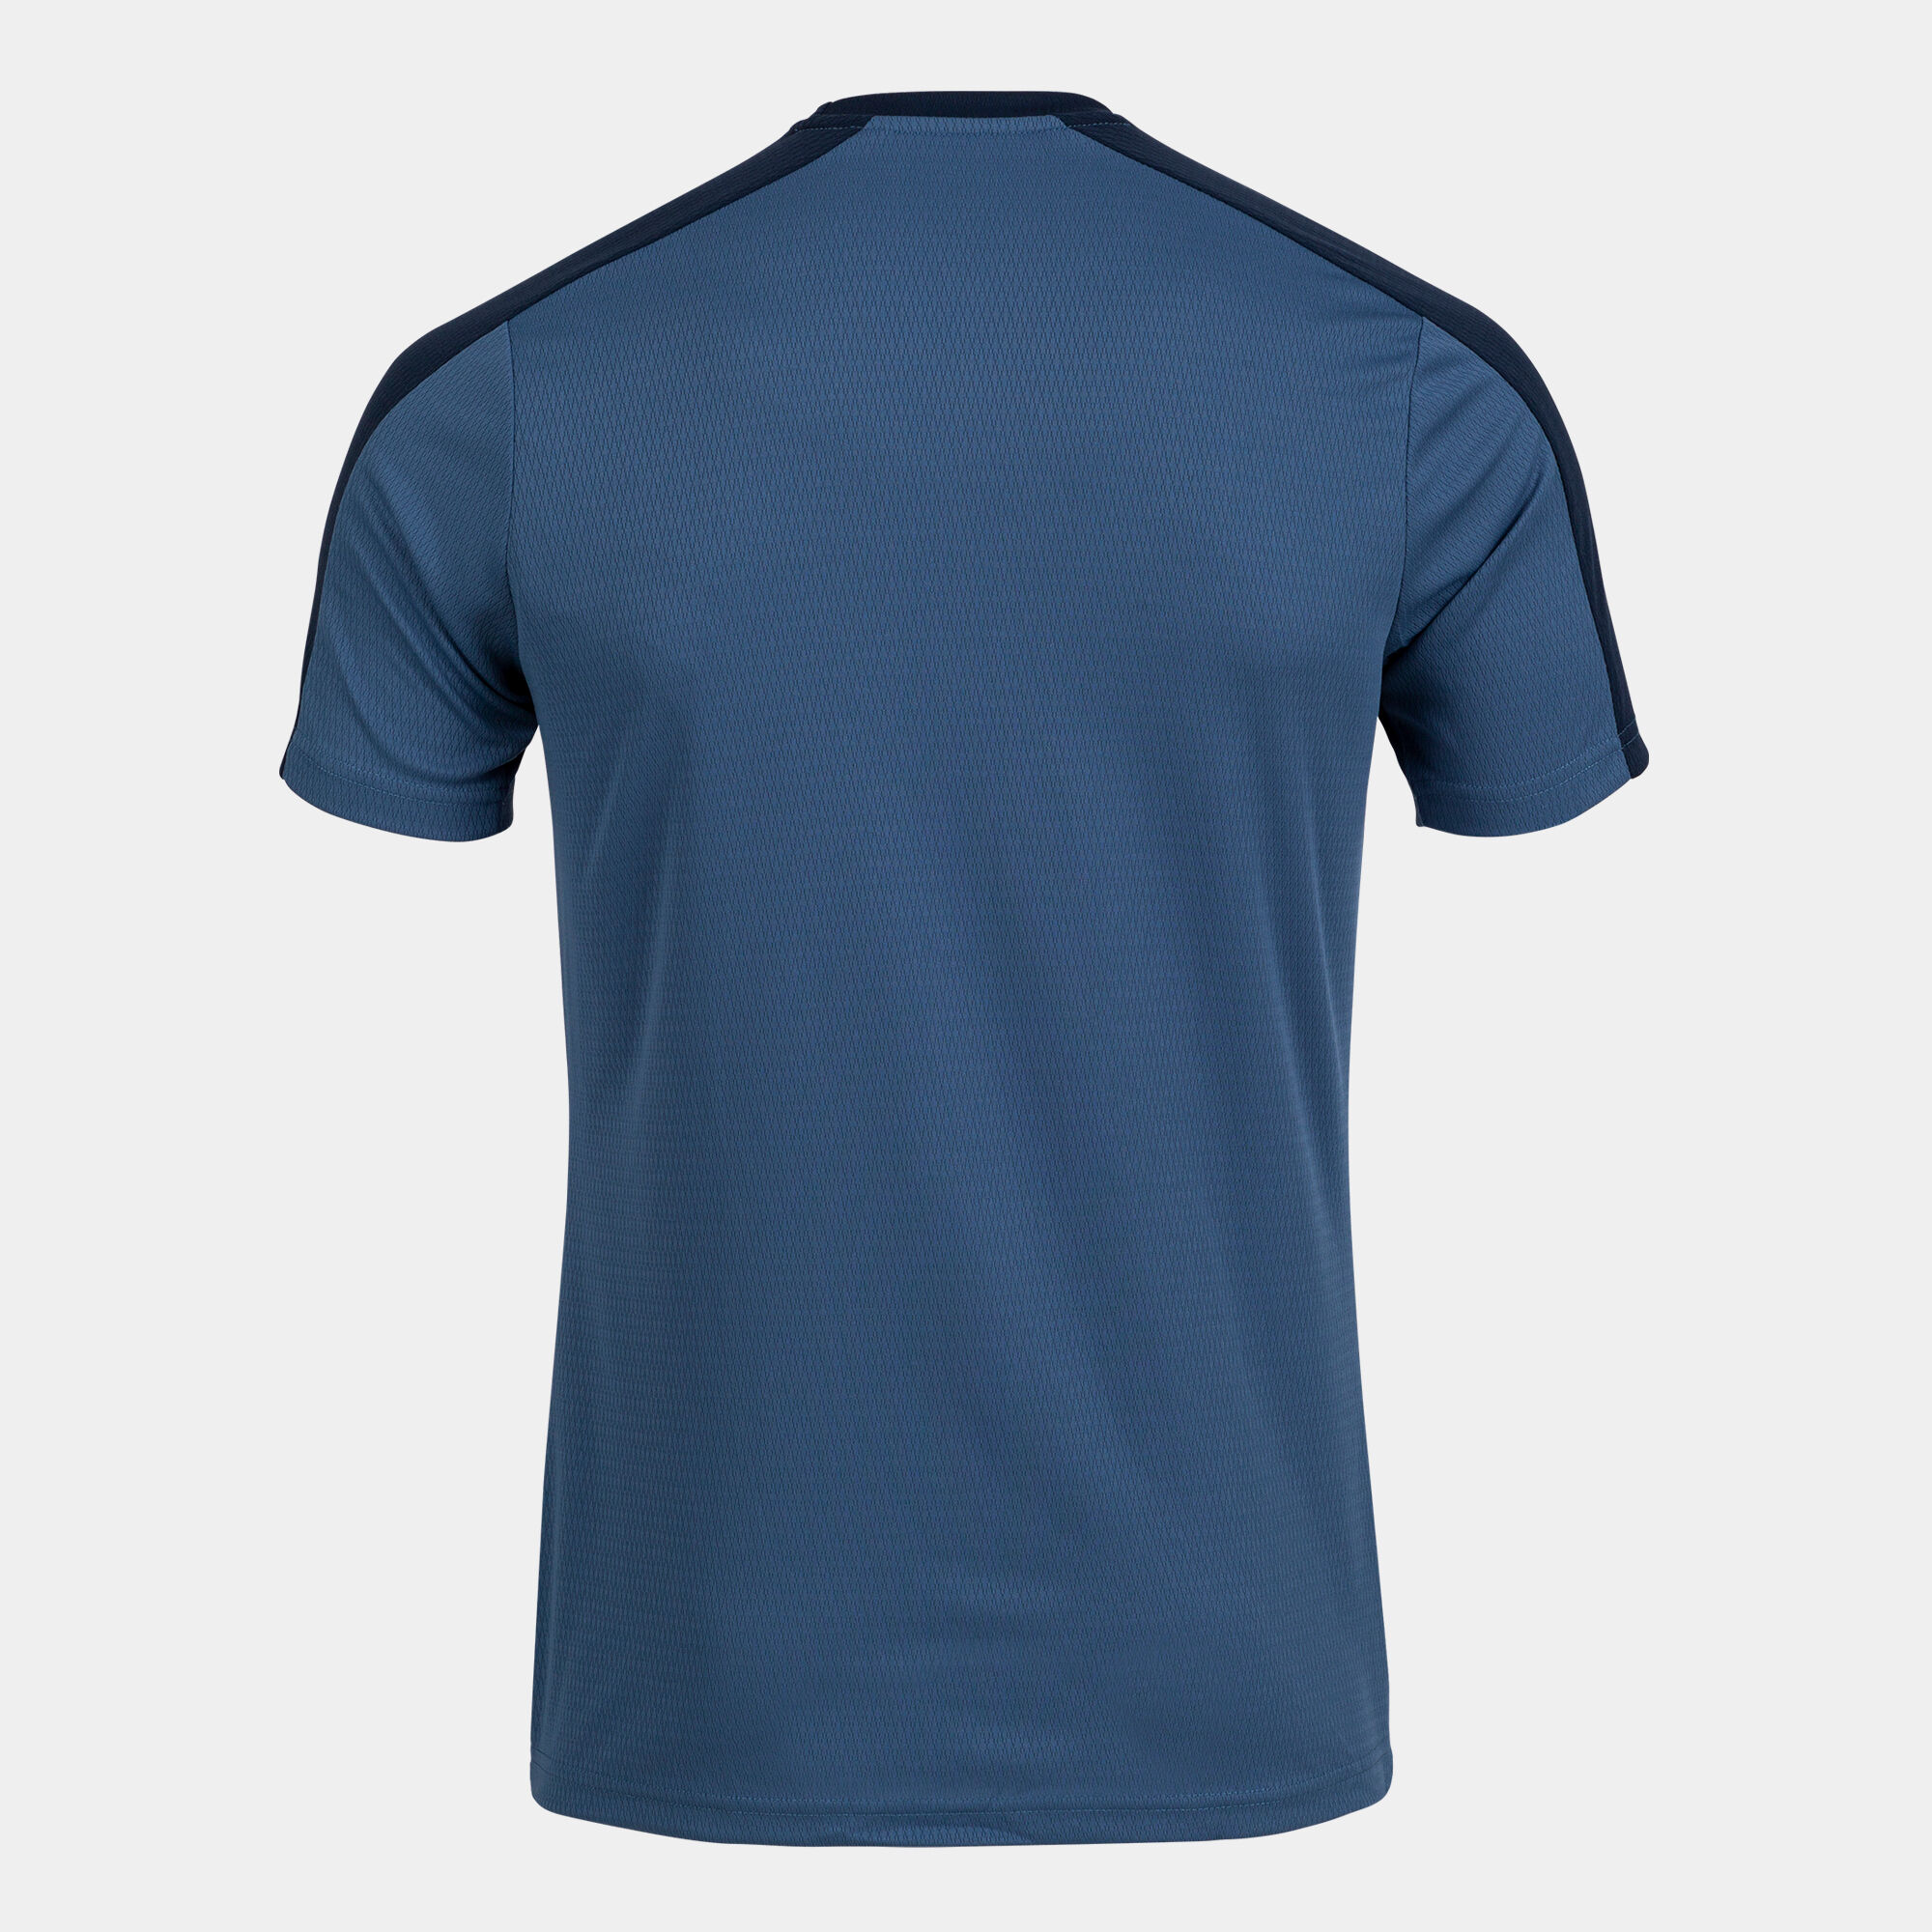 Camiseta manga corta hombre Eco Championship azul marino